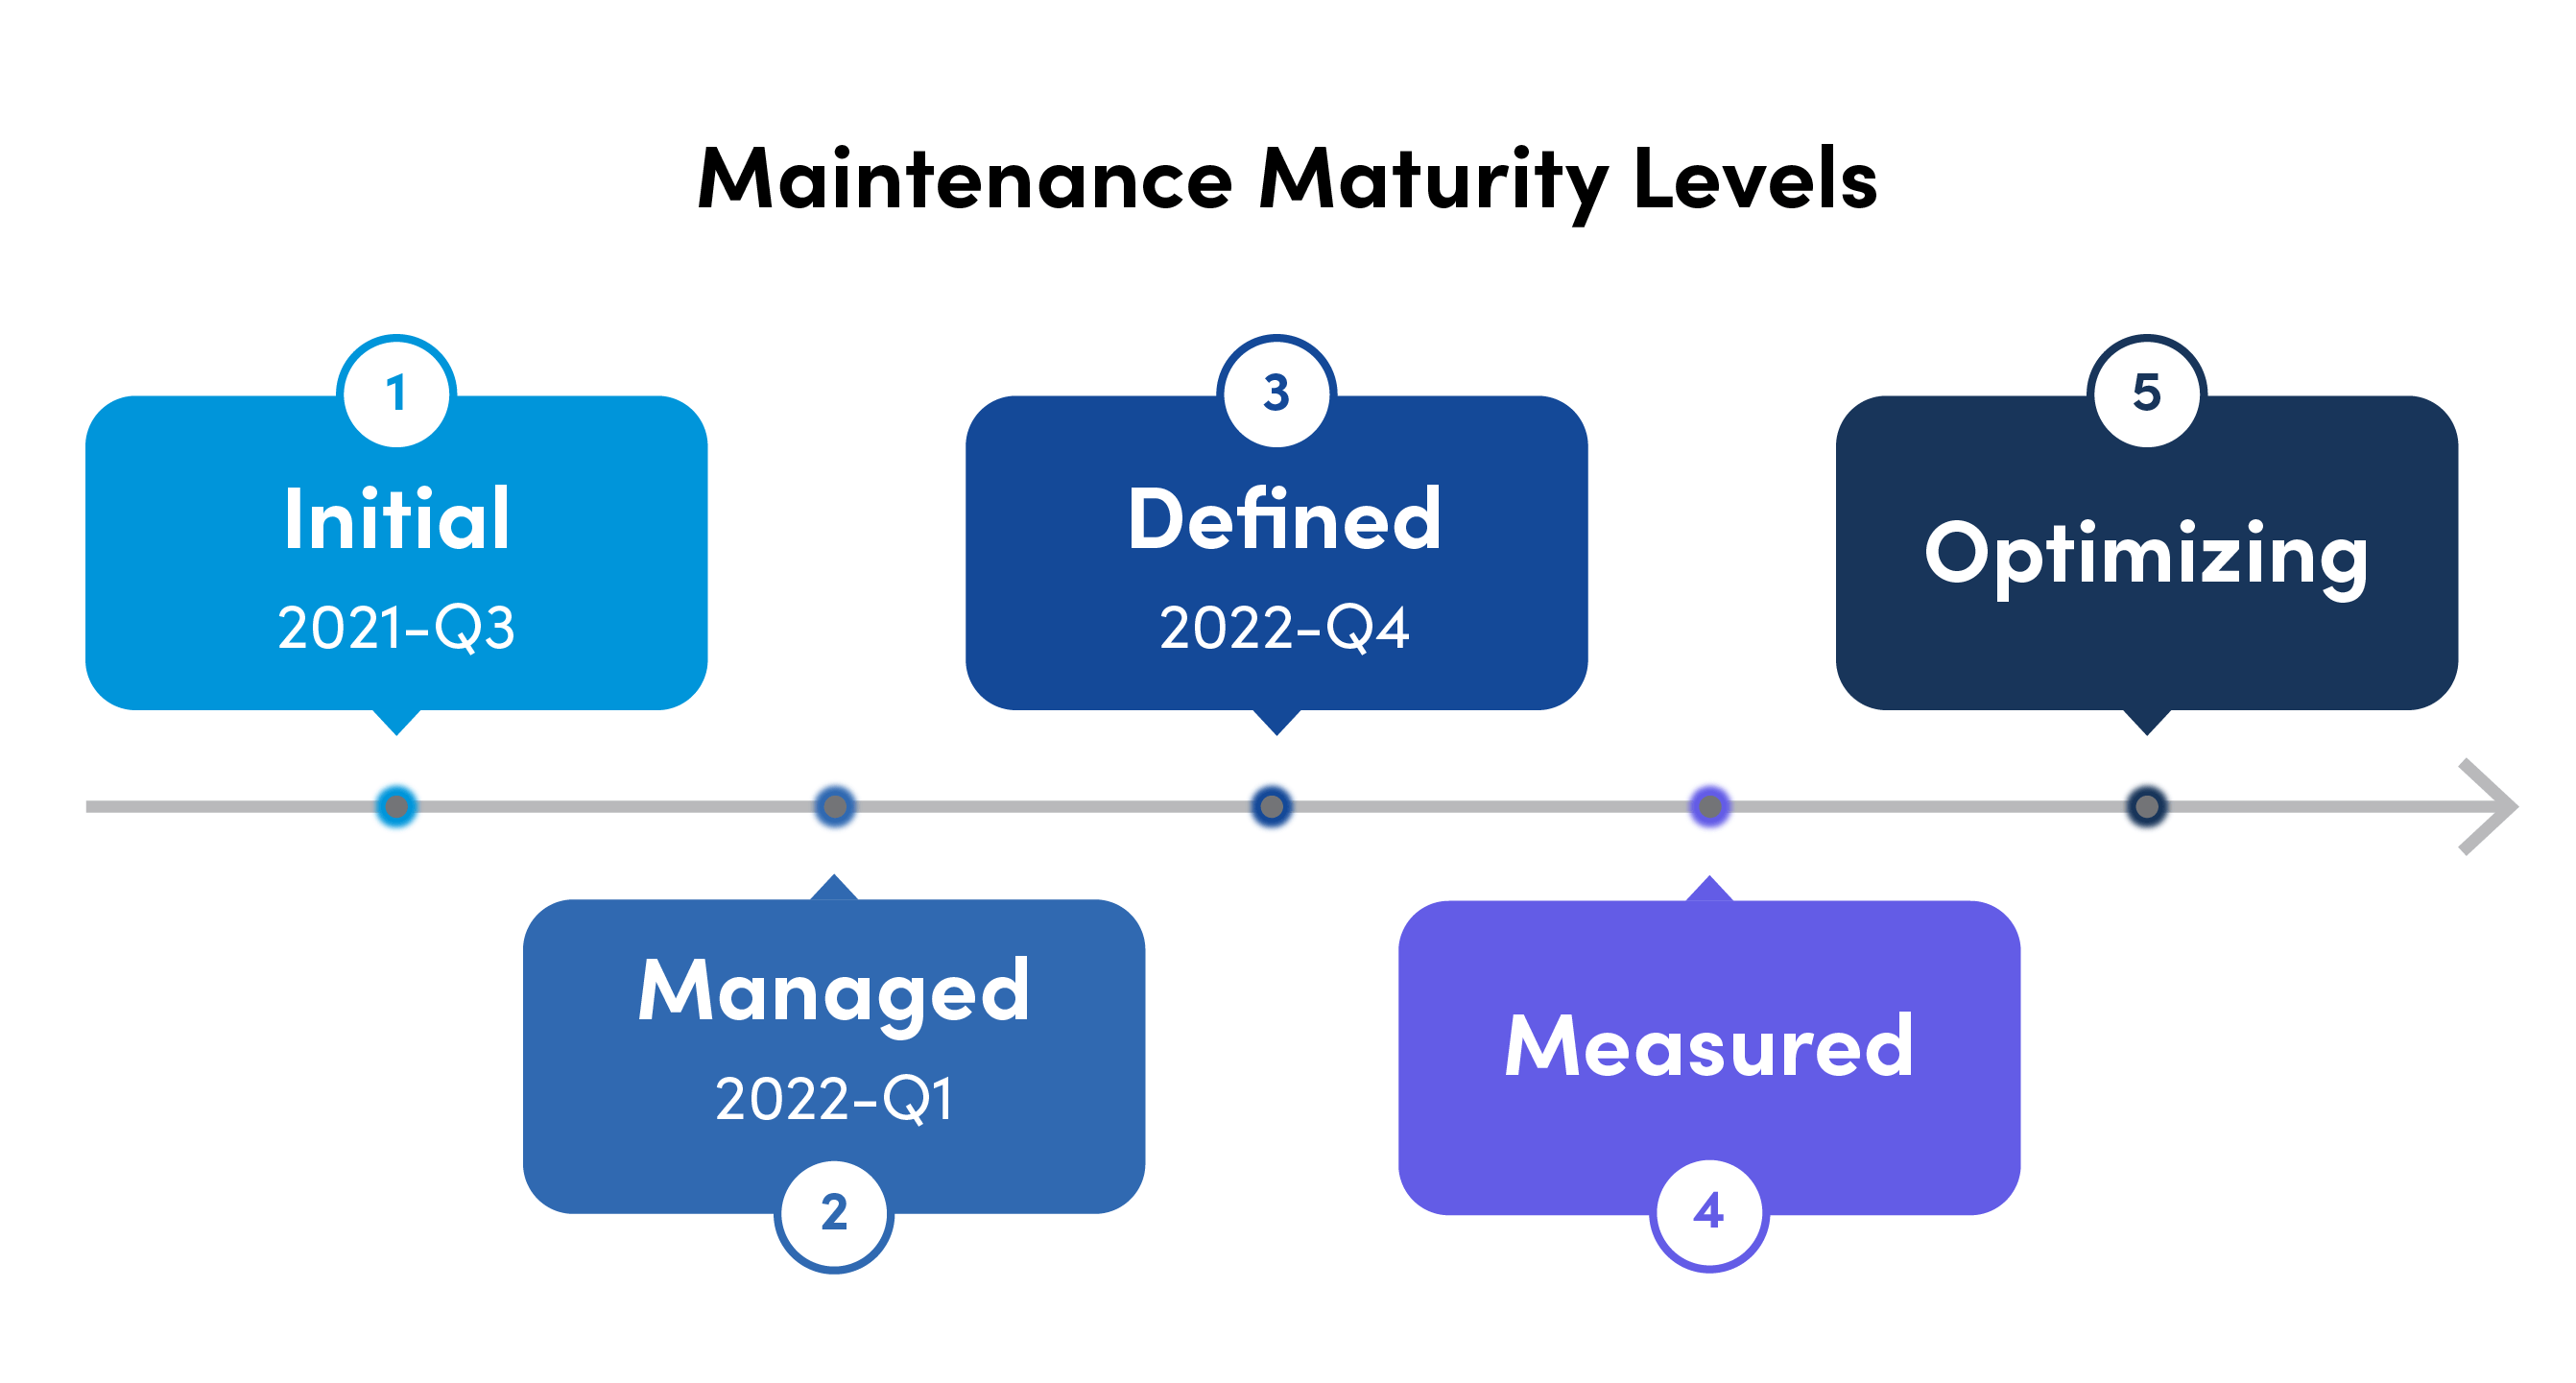 Maintenance maturity levels